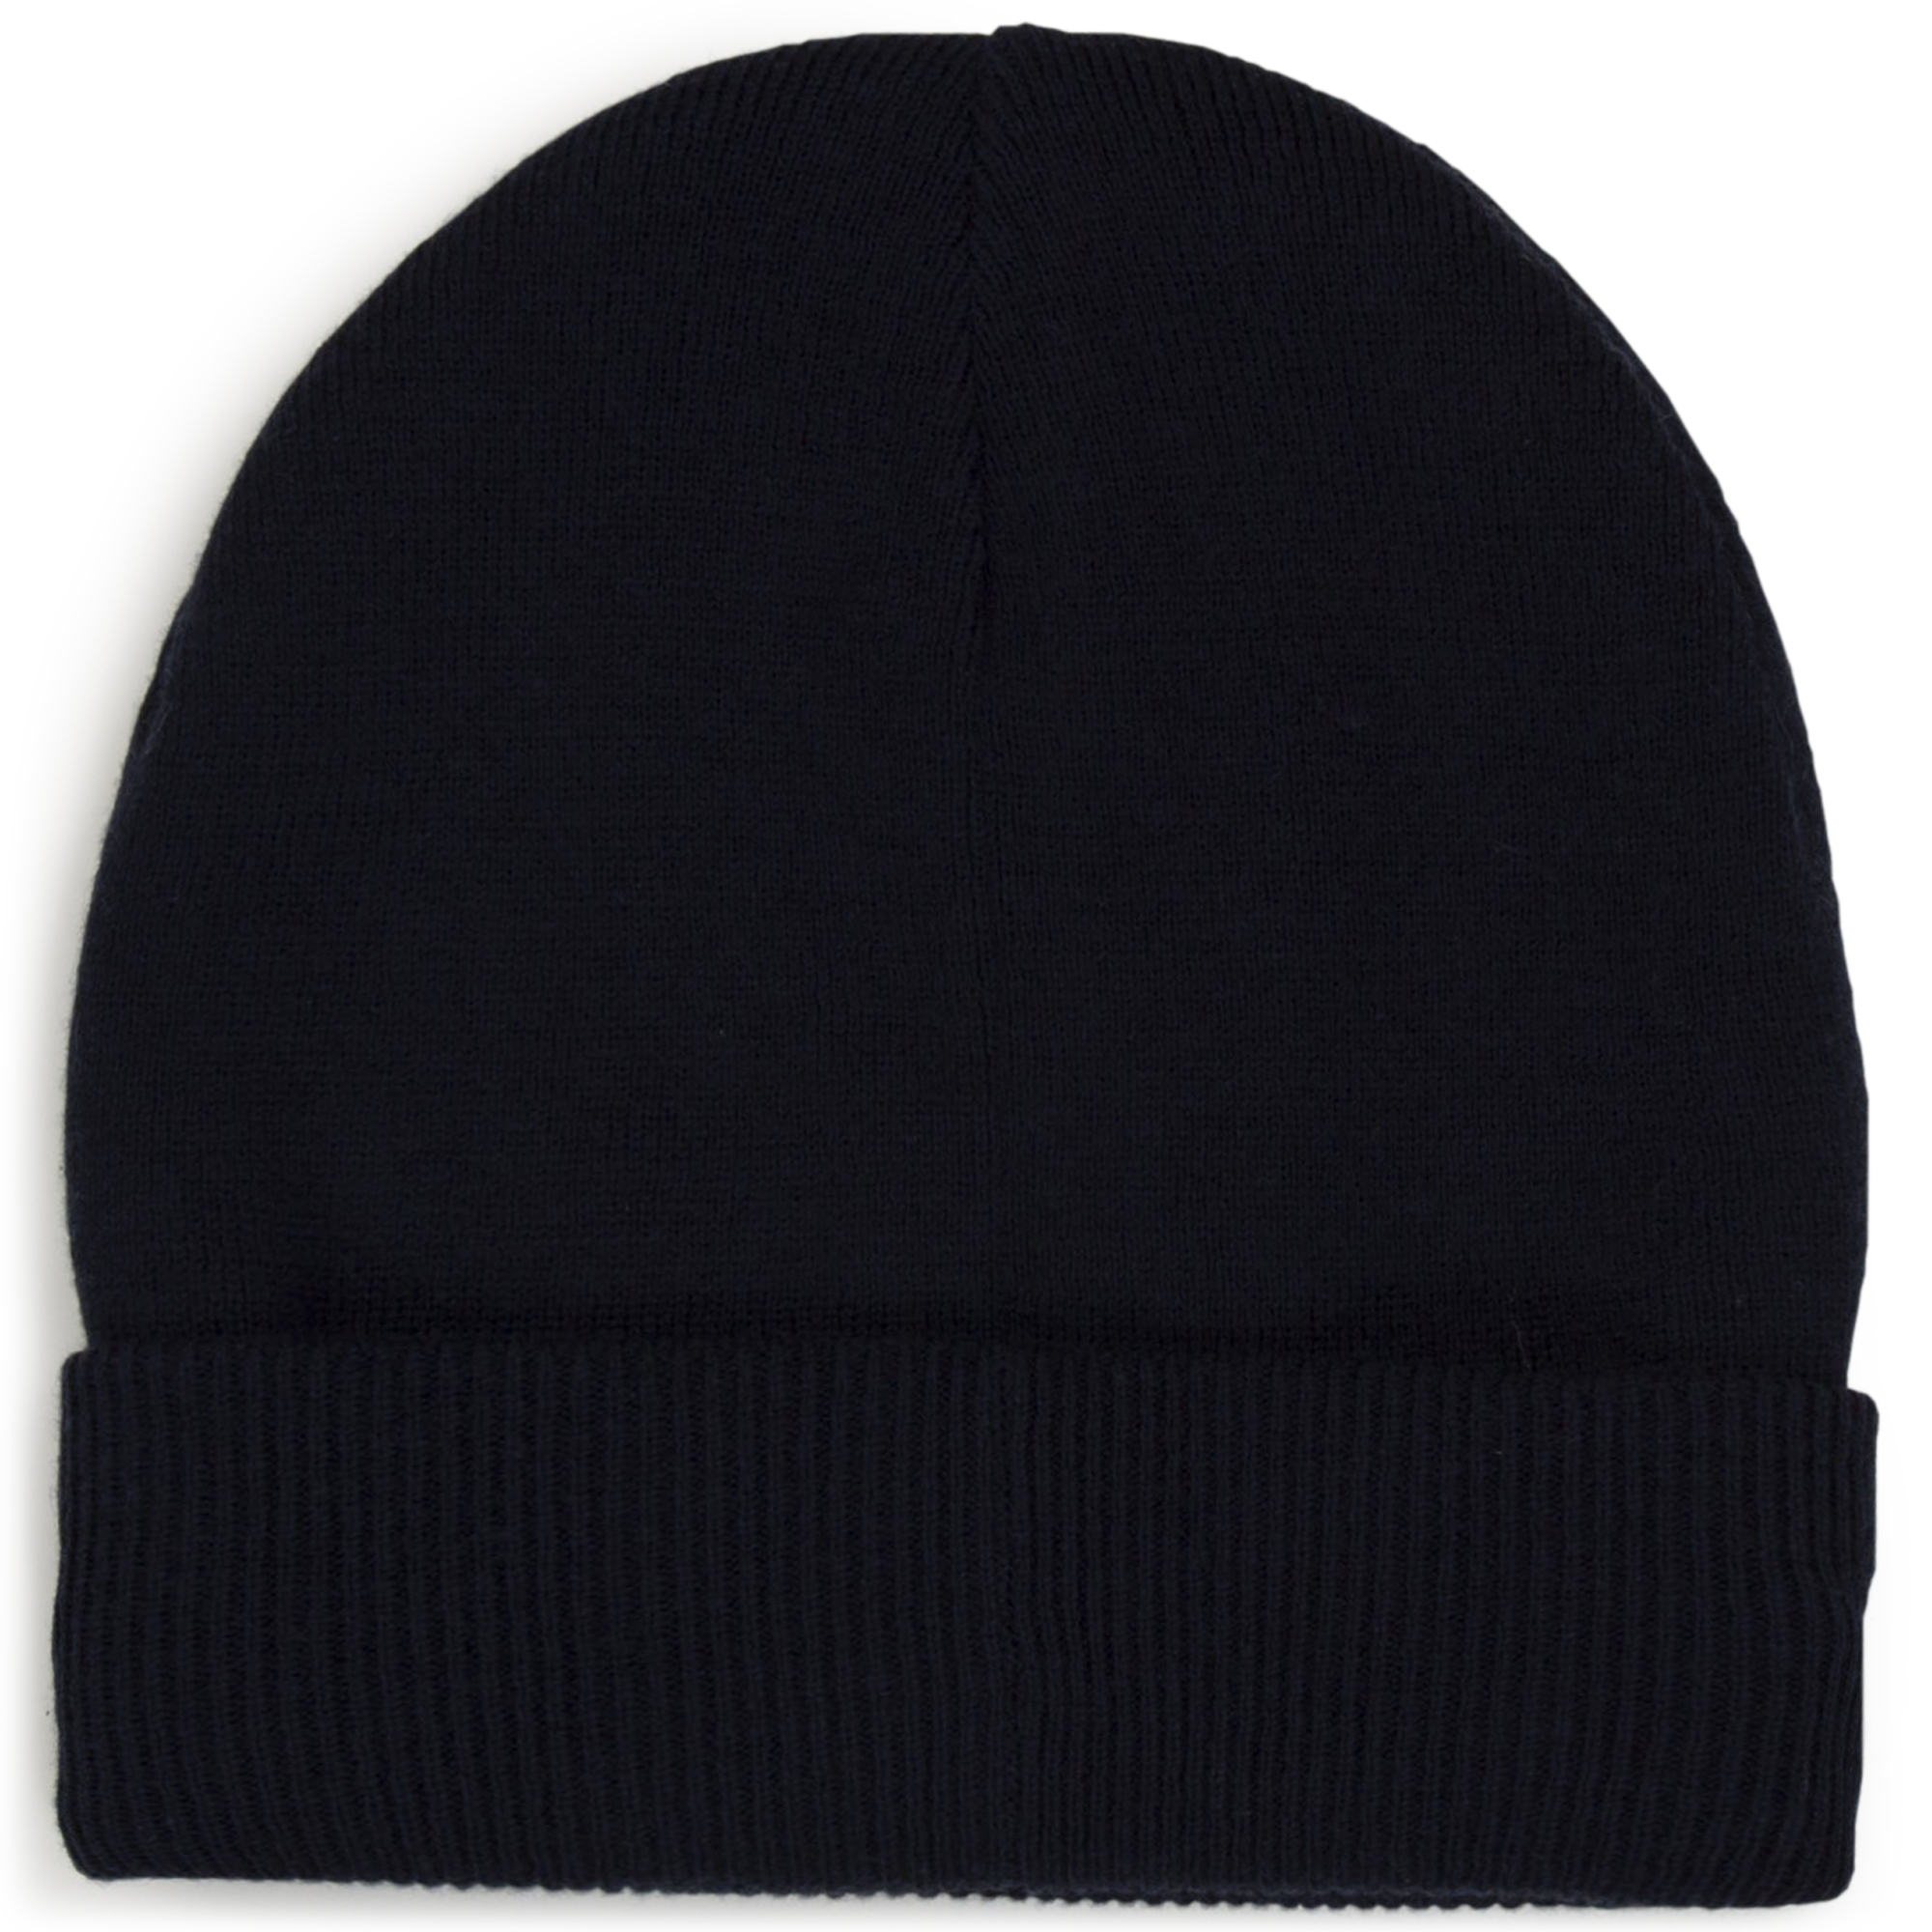 Plain lightweight knit hat MARC JACOBS for GIRL